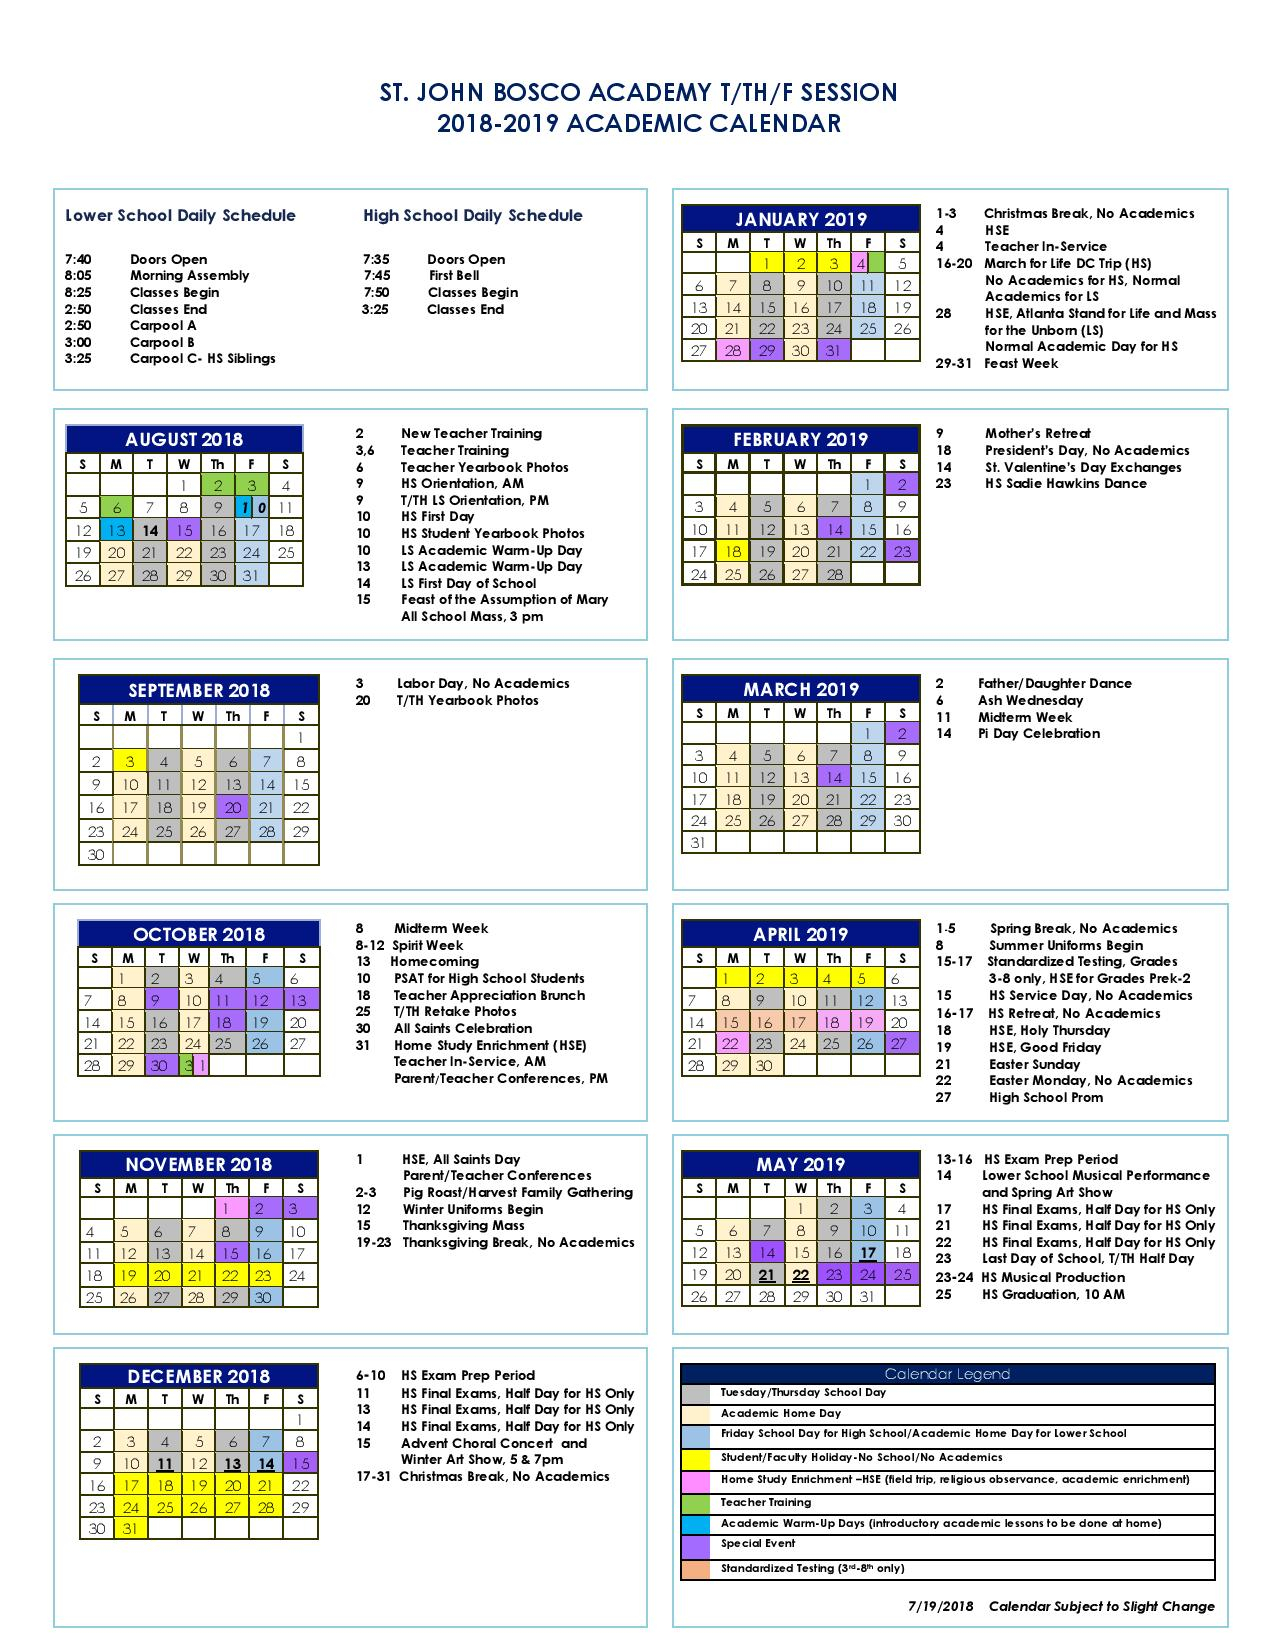 Academic Calendar St. John's University